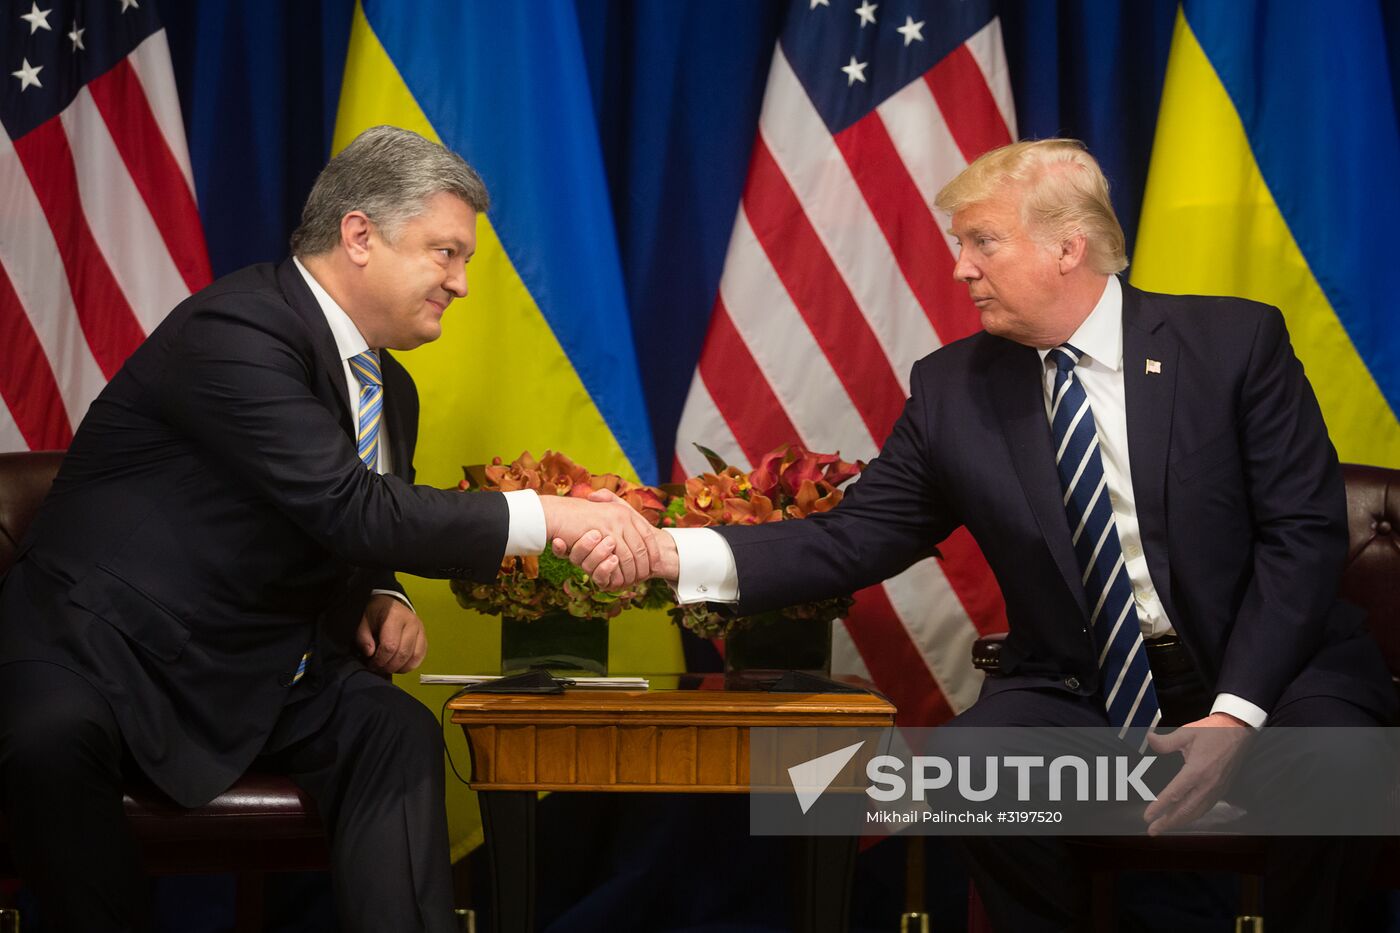 US President Donald Trump meets with Ukrainian President Petro Poroshenko